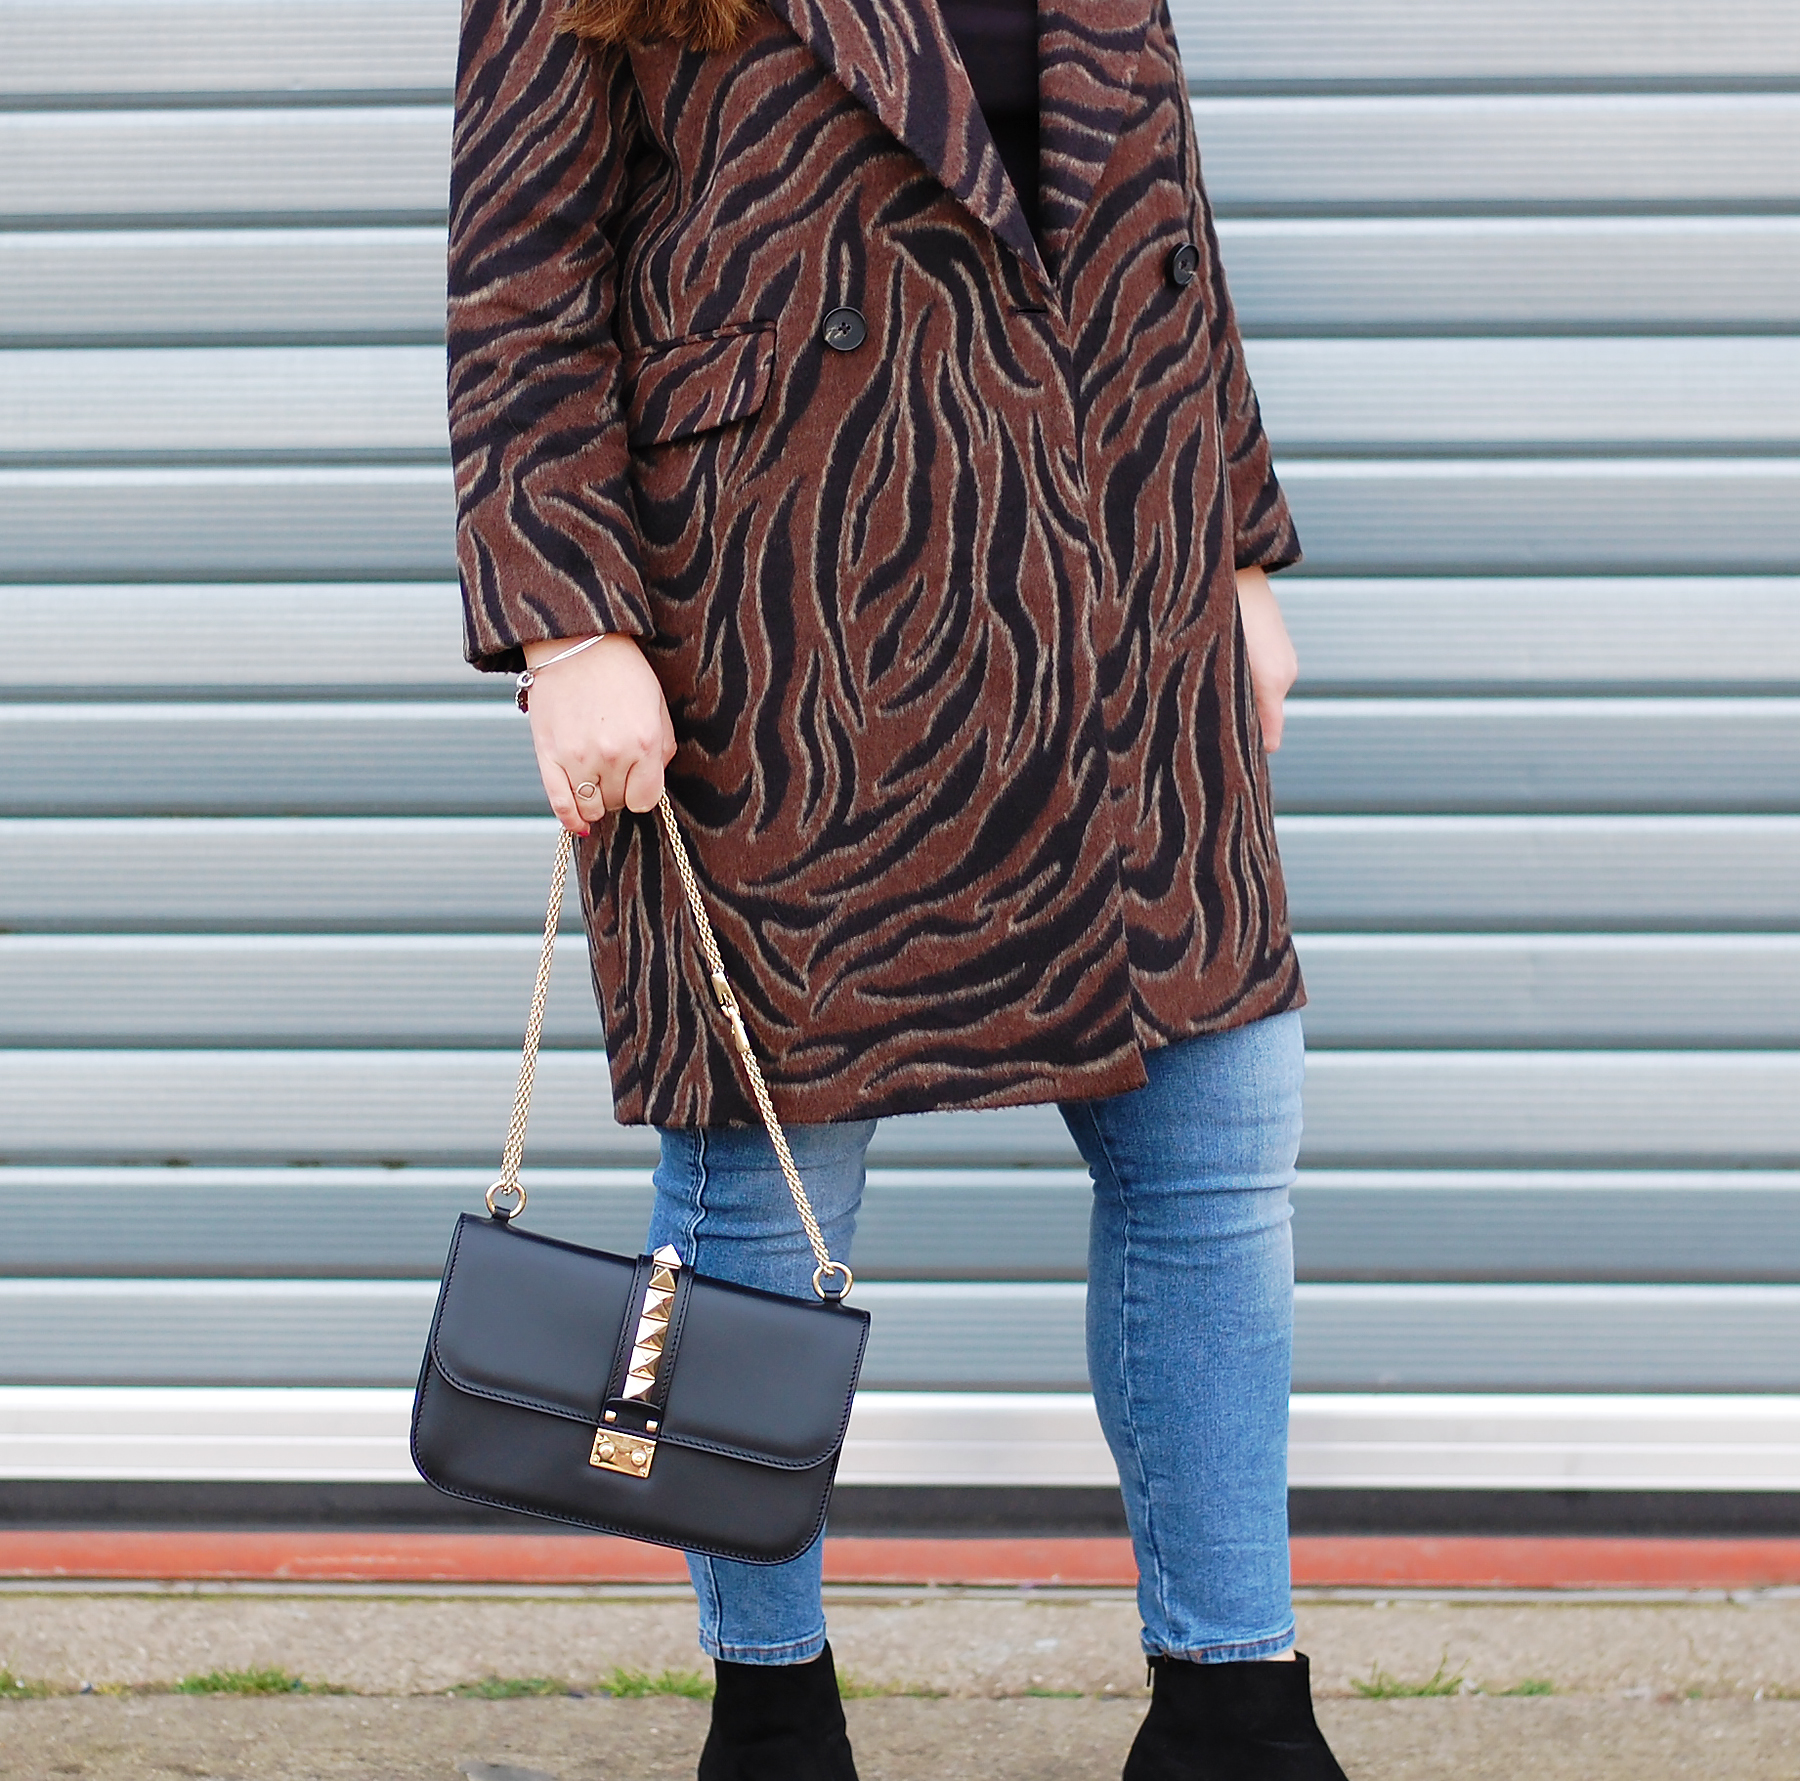 Zara Animal Jacquard Coat Outfit